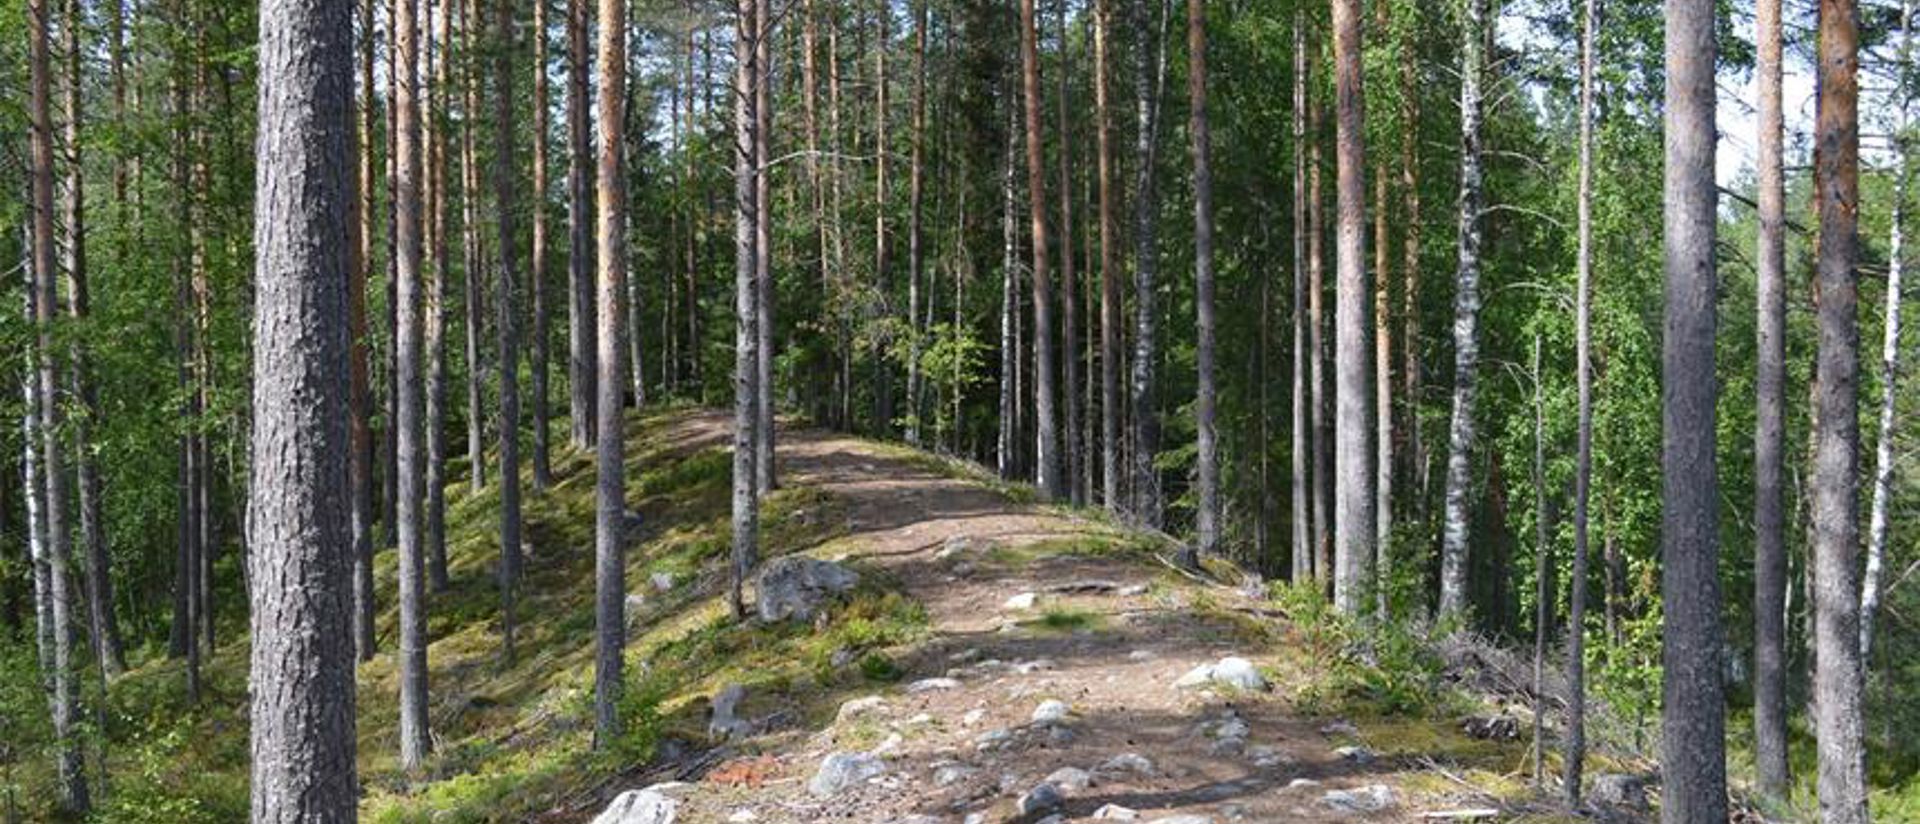 Ollinpolku trail in a forest